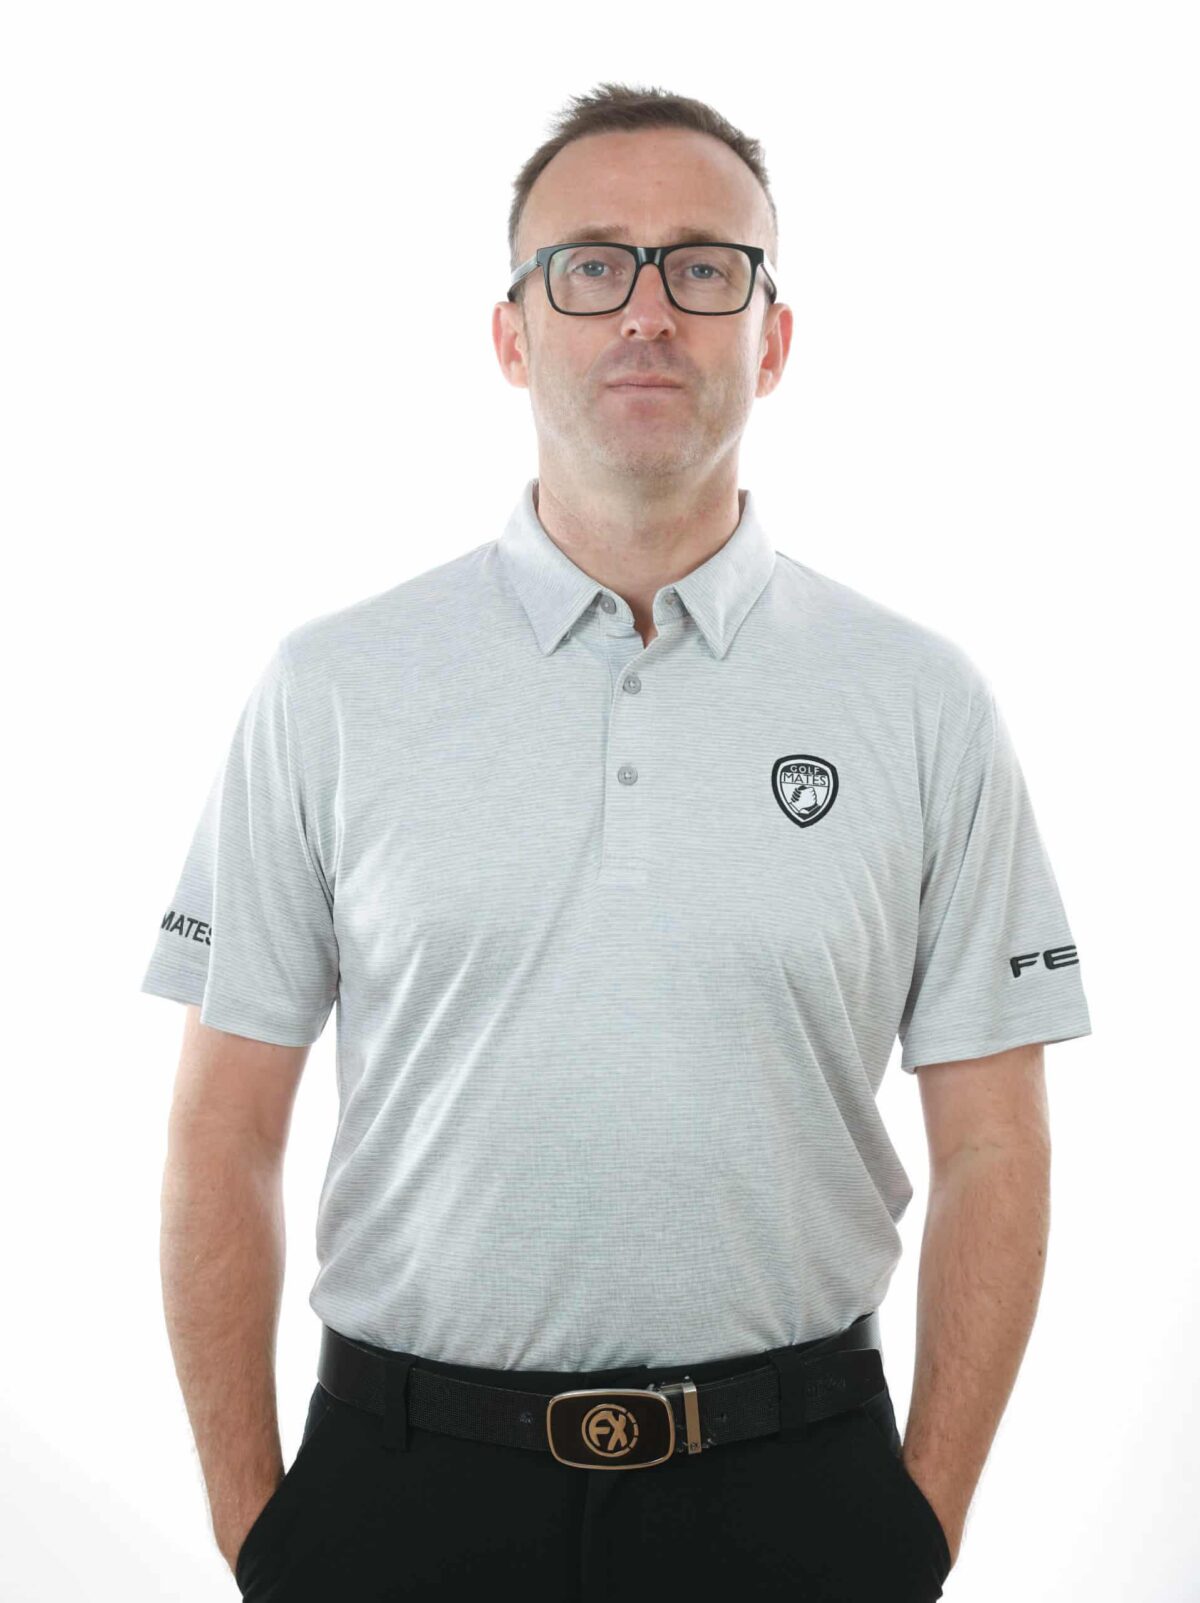 GM oban grey front golf polo shirt